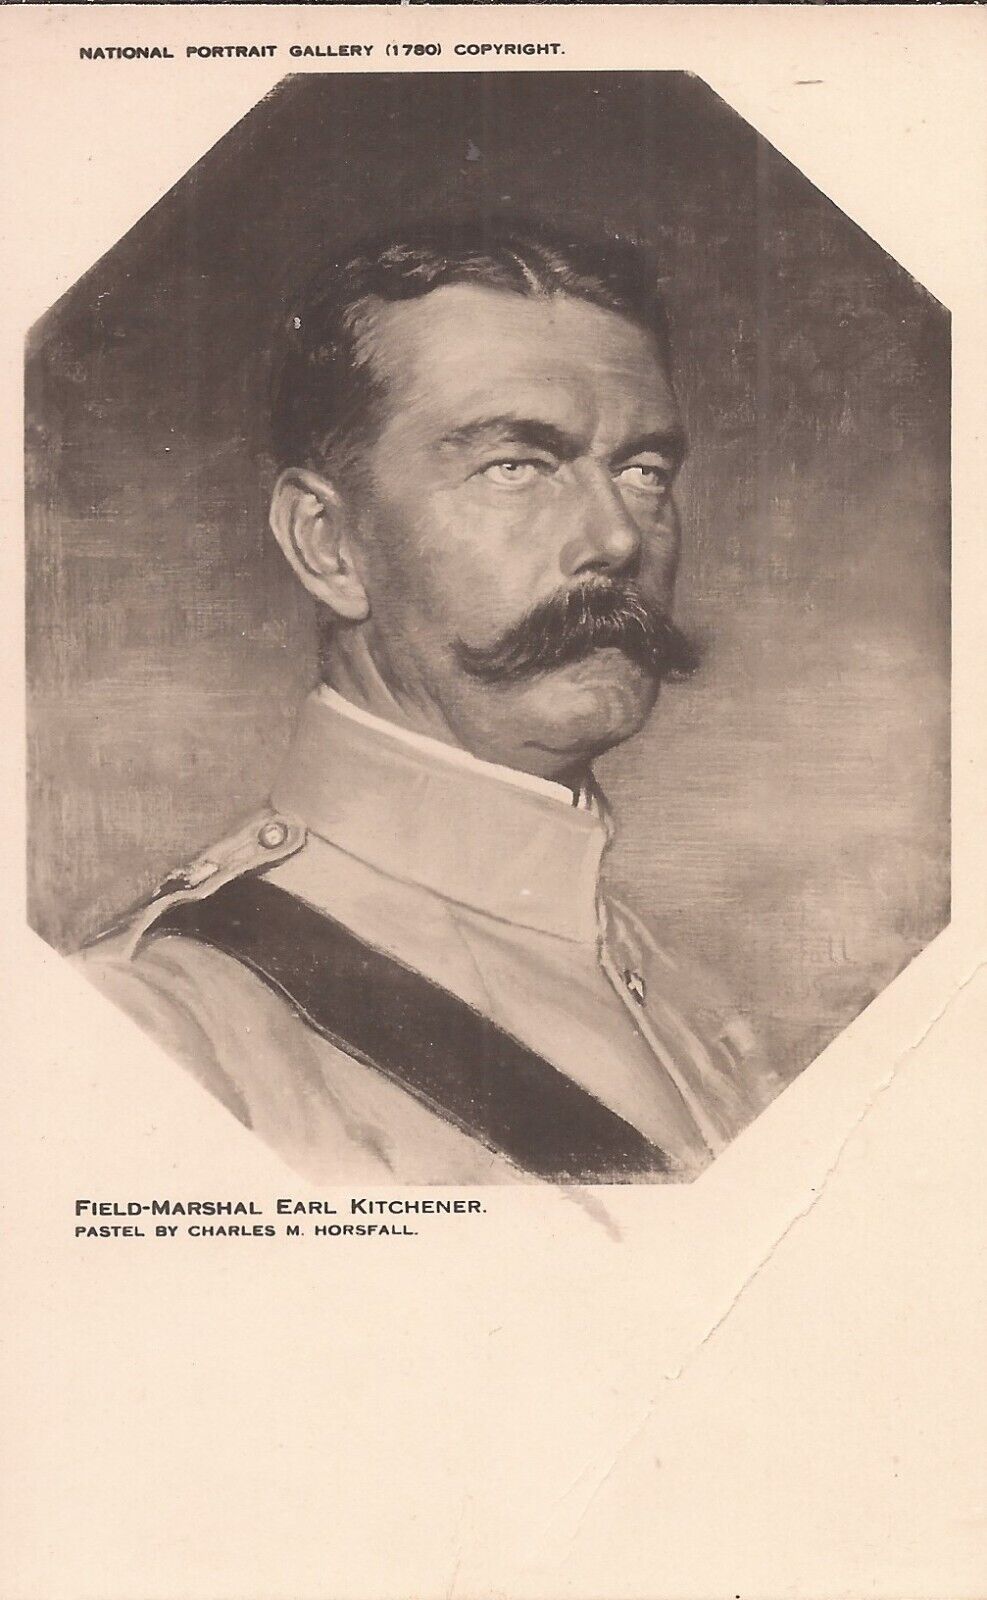 Field-Marshal Earl Kitchener - Pastel: Charles M. Horsfall